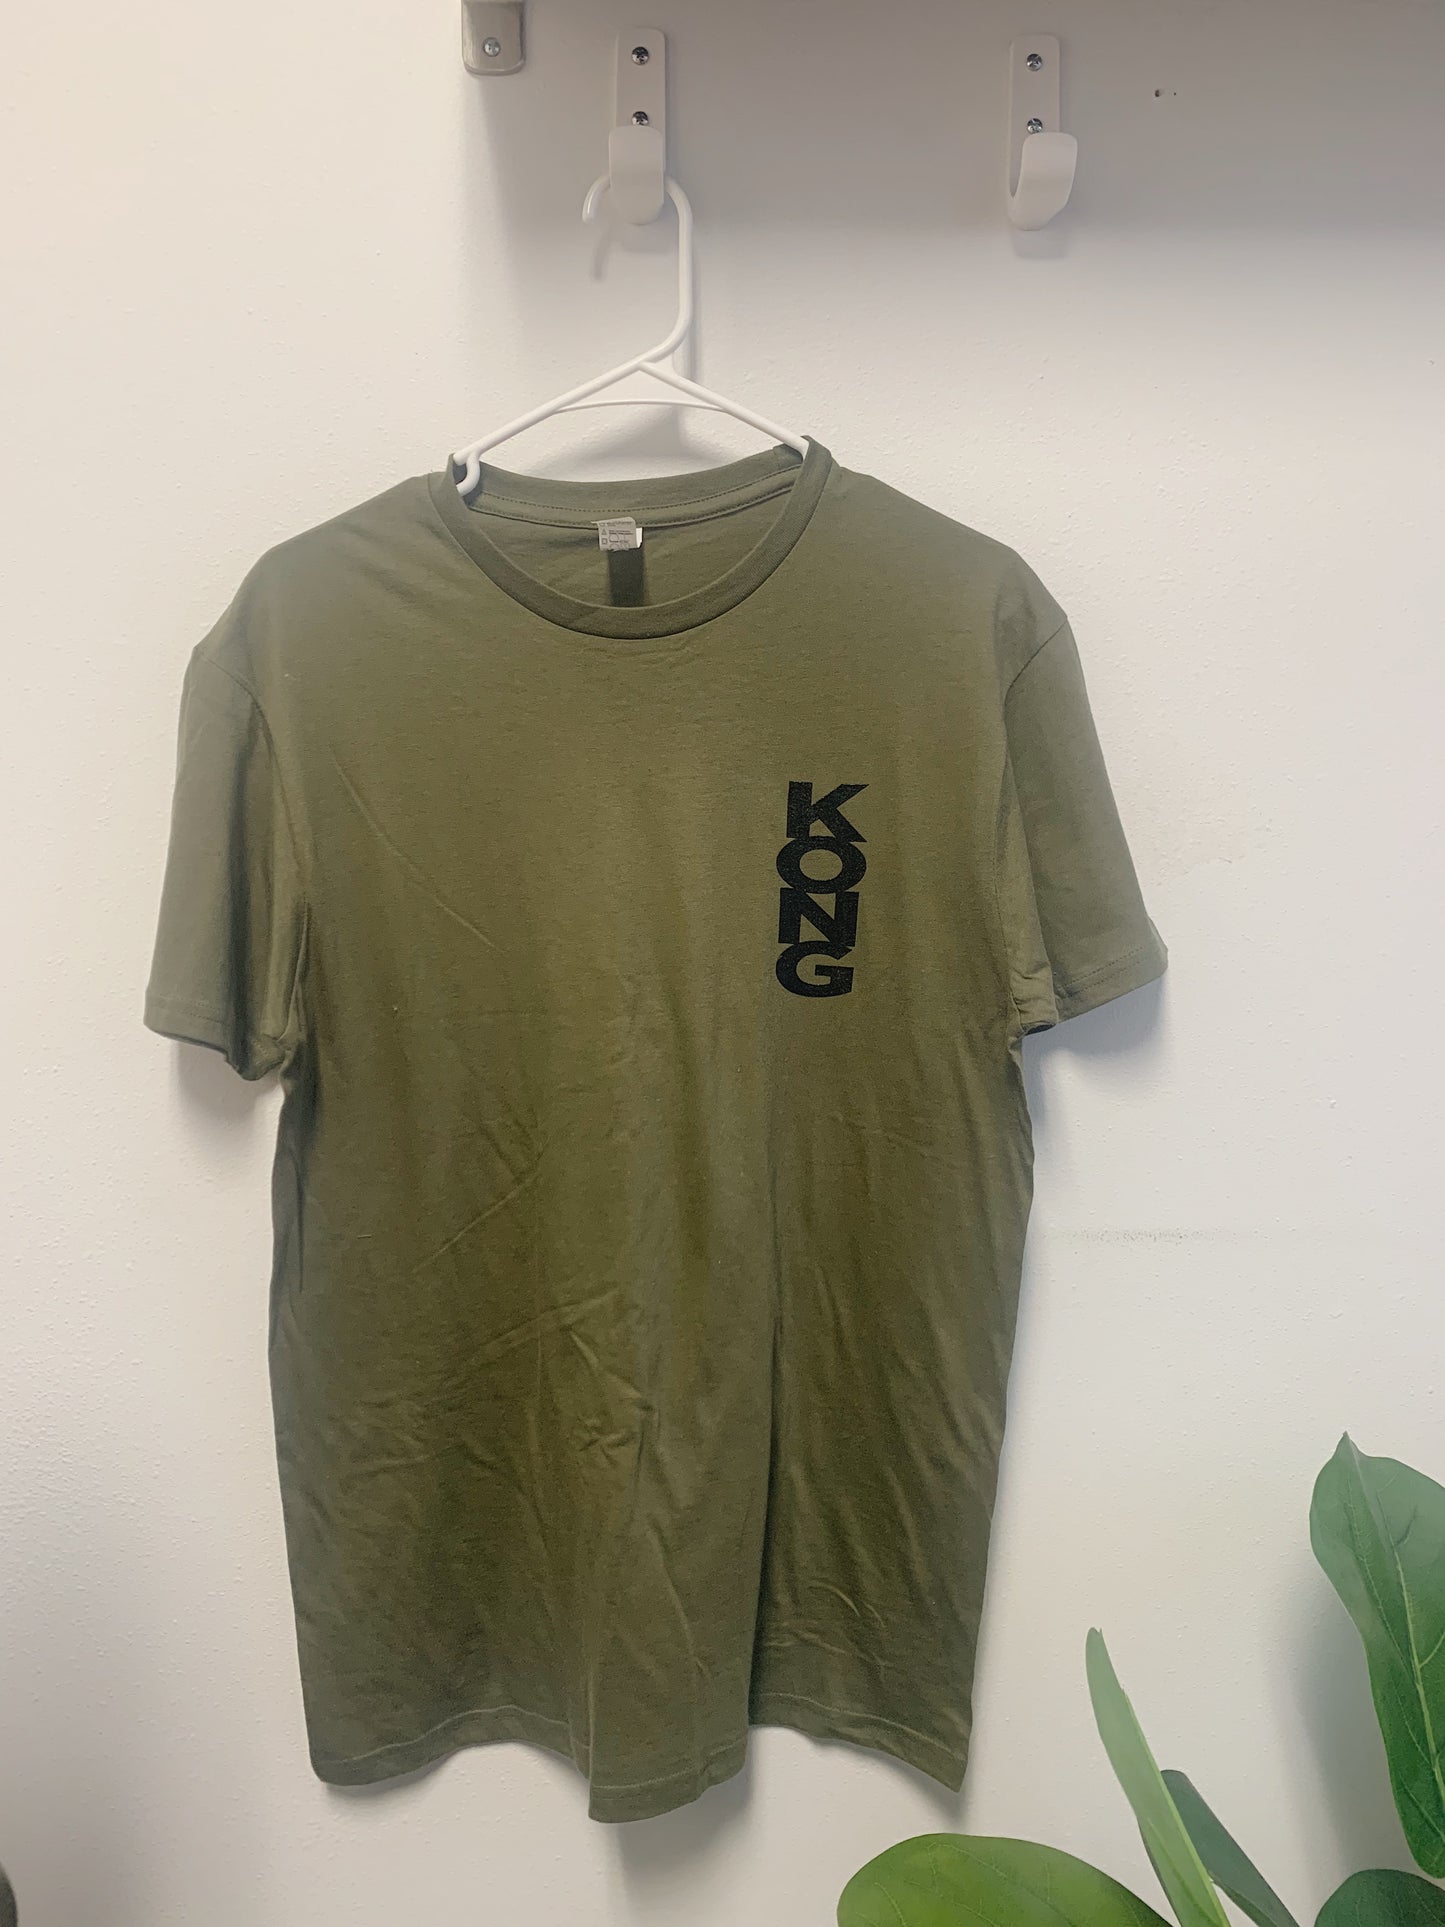 Kong Short Sleeve T-shirt - Olive Green